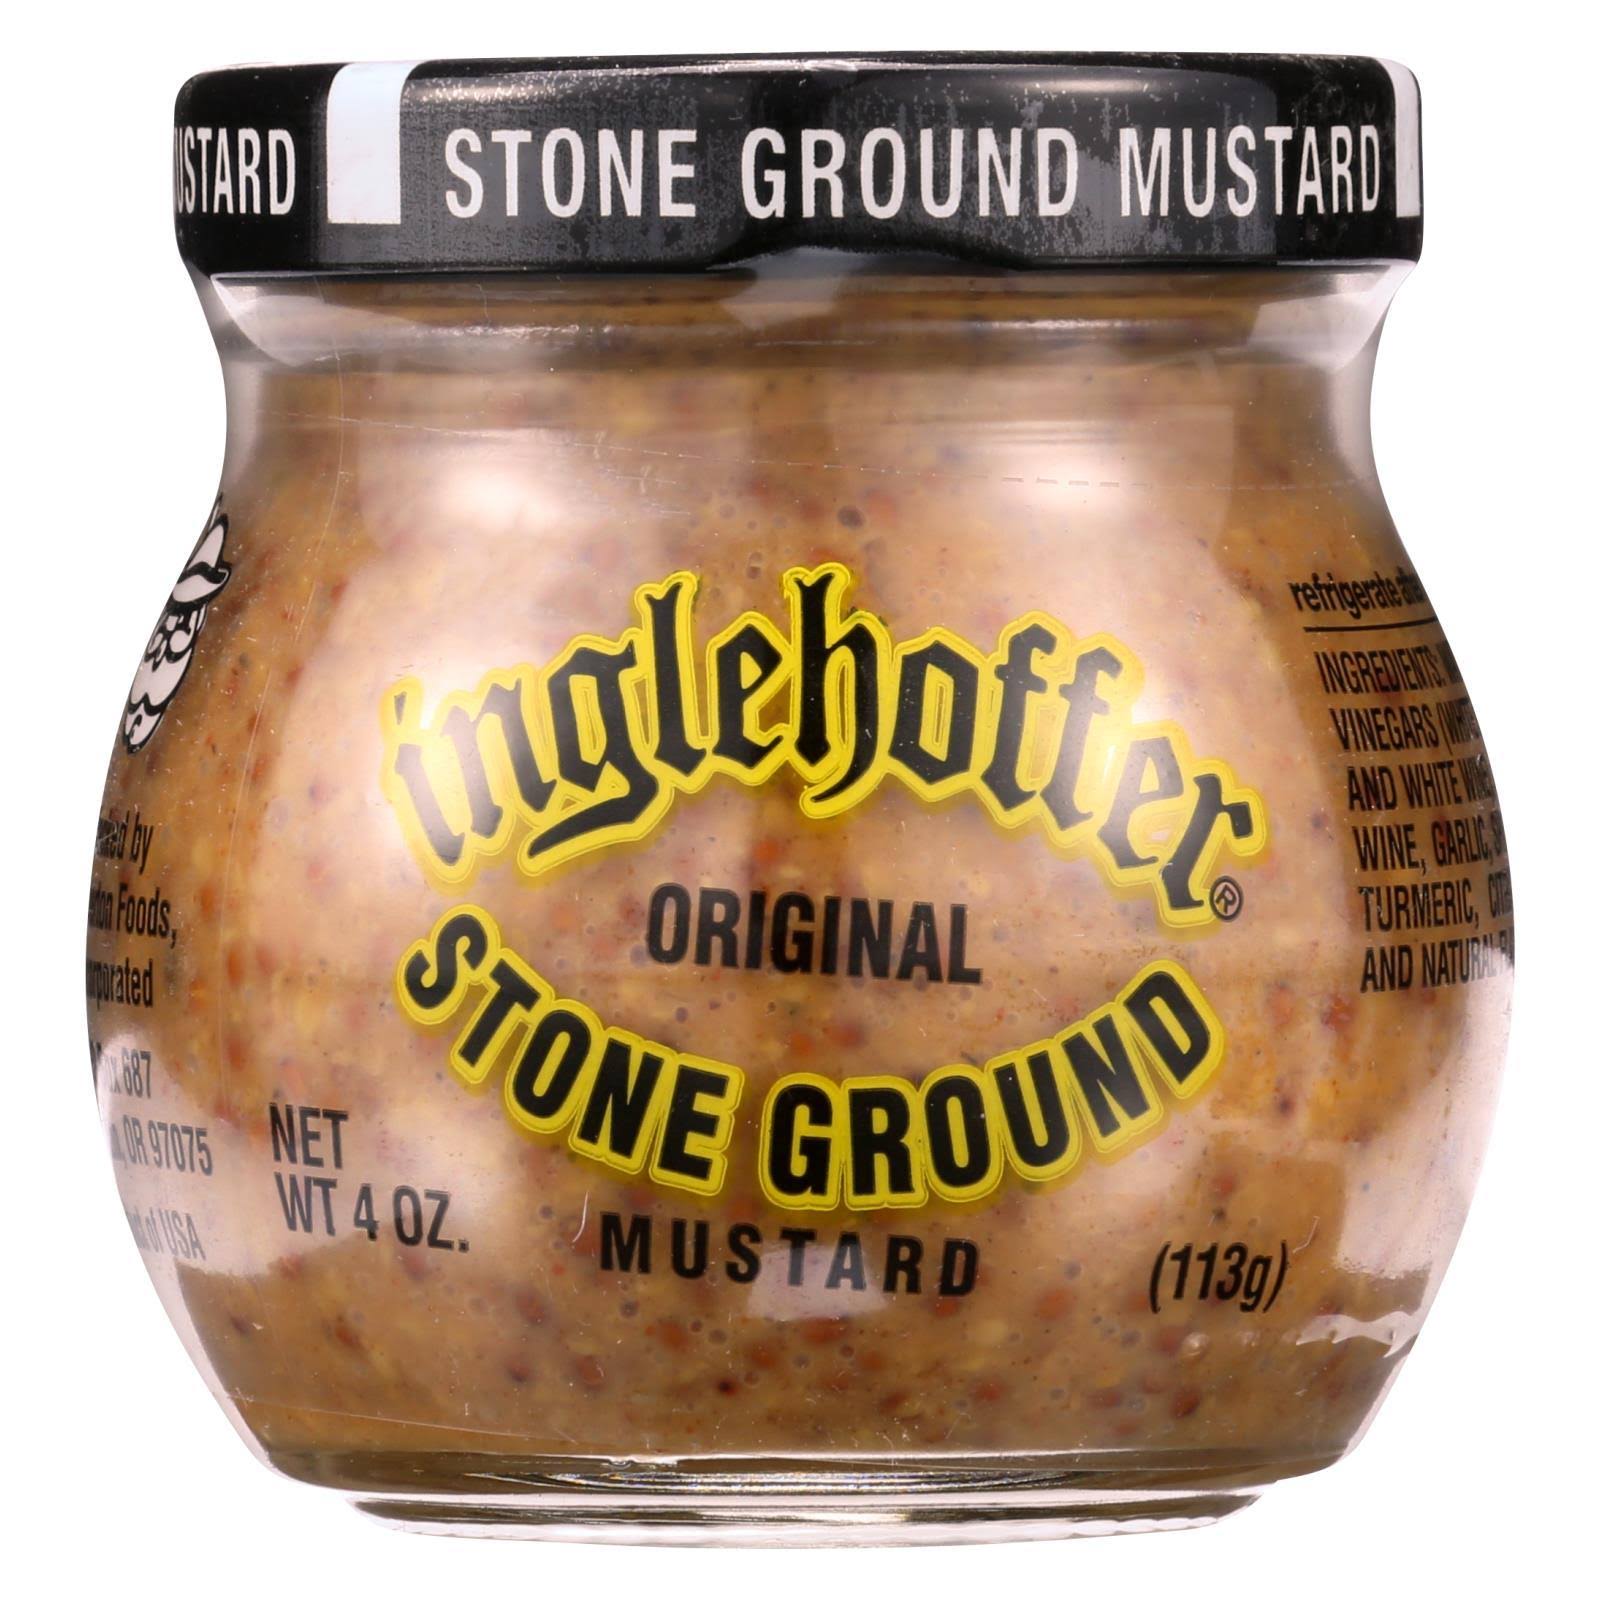 Inglehoffer Stone Ground Mustard - 4oz, Original